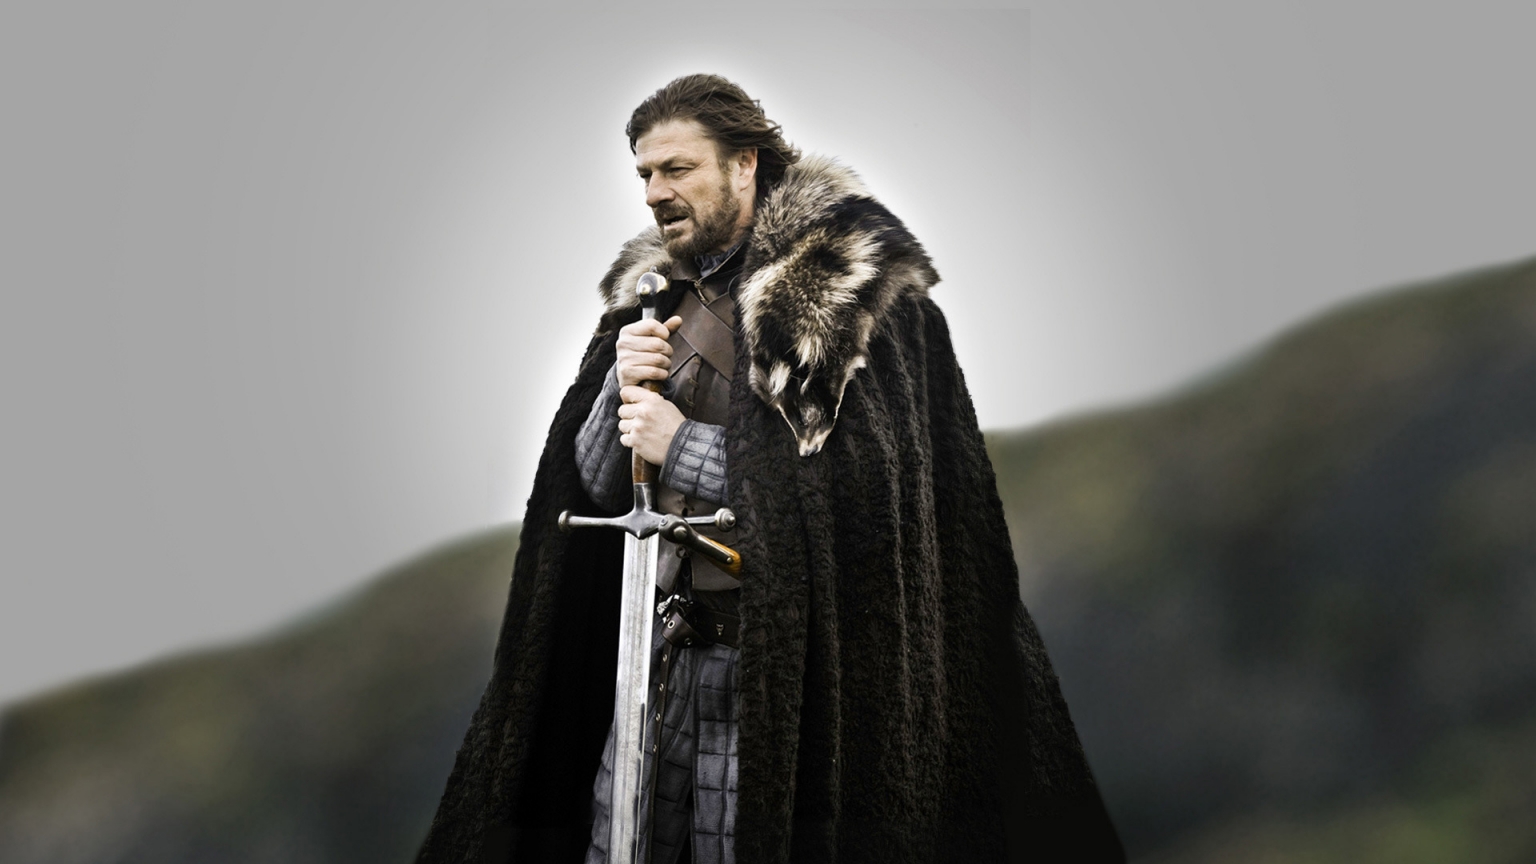 Eddard Stark for 1536 x 864 HDTV resolution